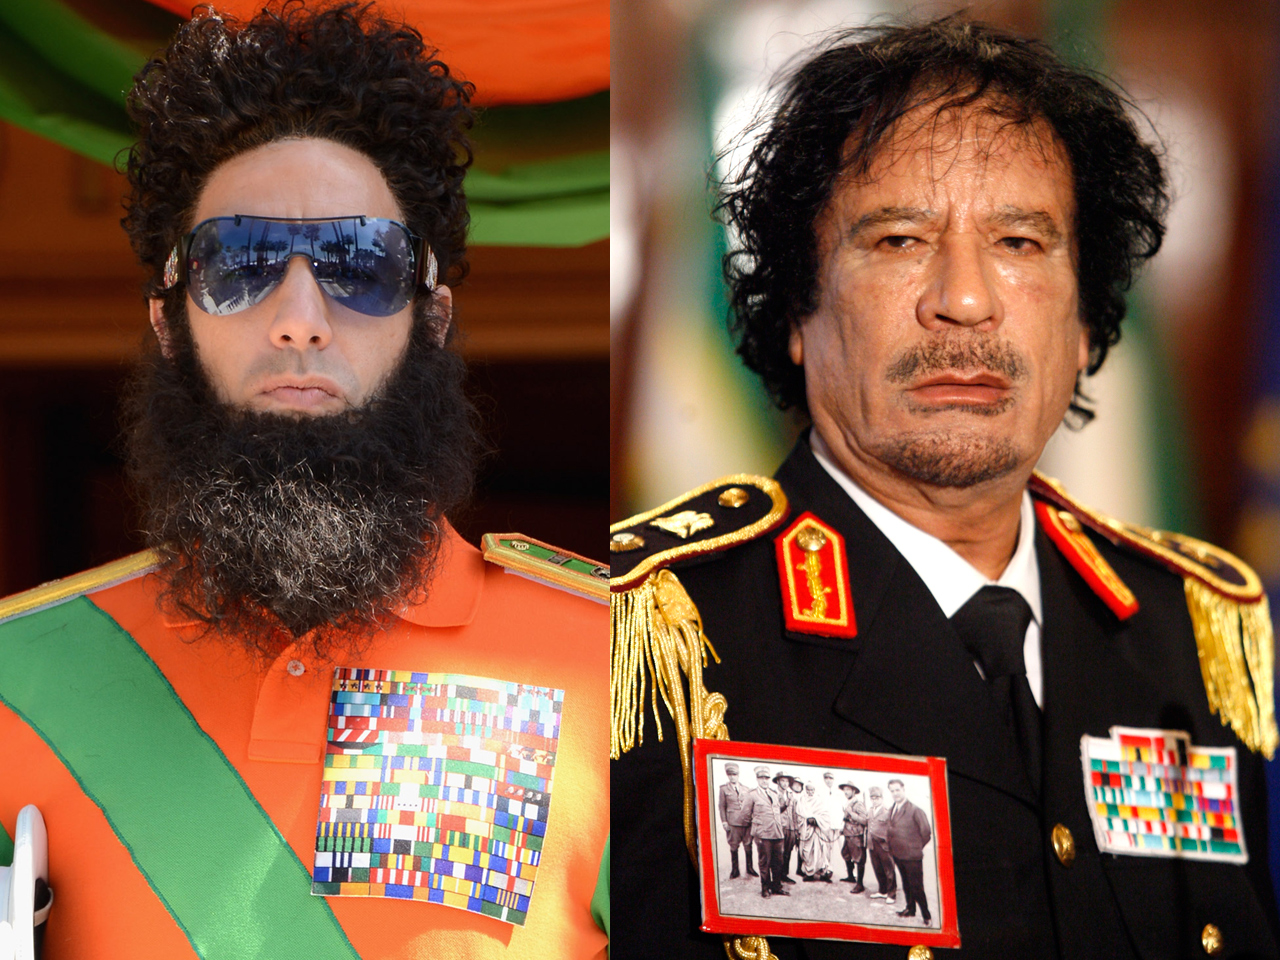 Relatieve grootte samenvoegen Imperial Sacha Baron Cohen: Qaddafi inspired "Dictator" - CBS News